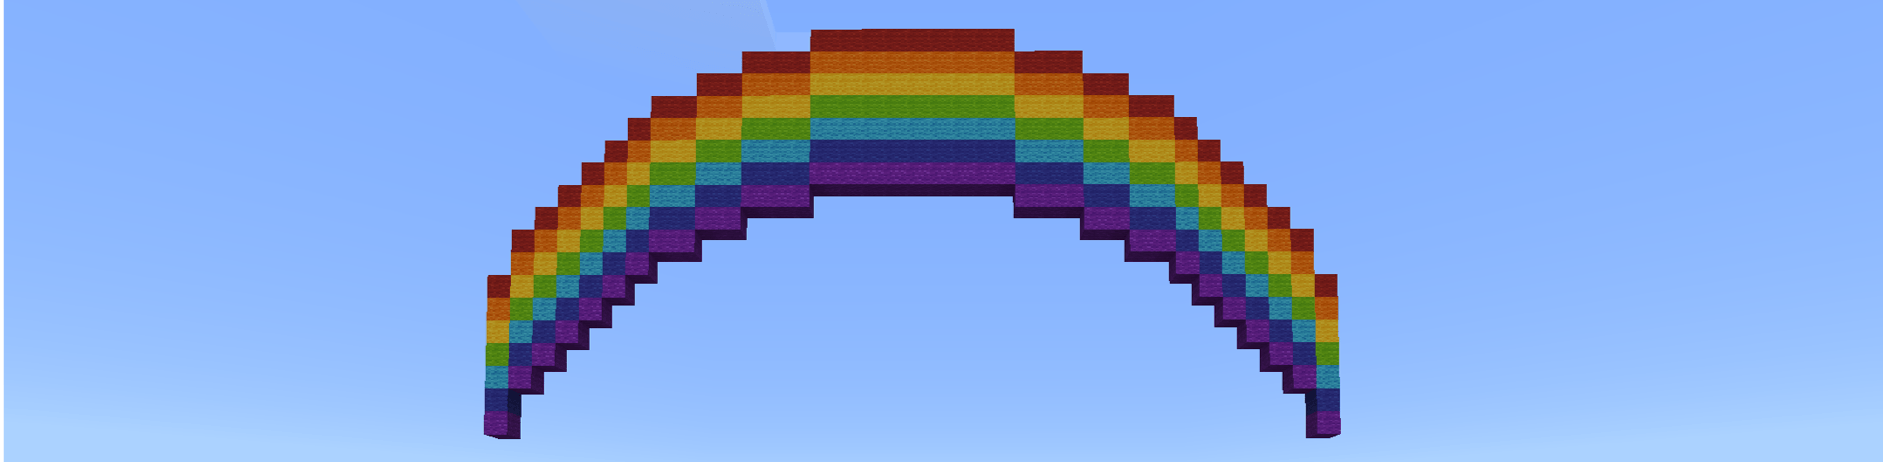 RAINBOW Minecraft Logo - Minecraft Coding: Code a Rainbow - teachwithict